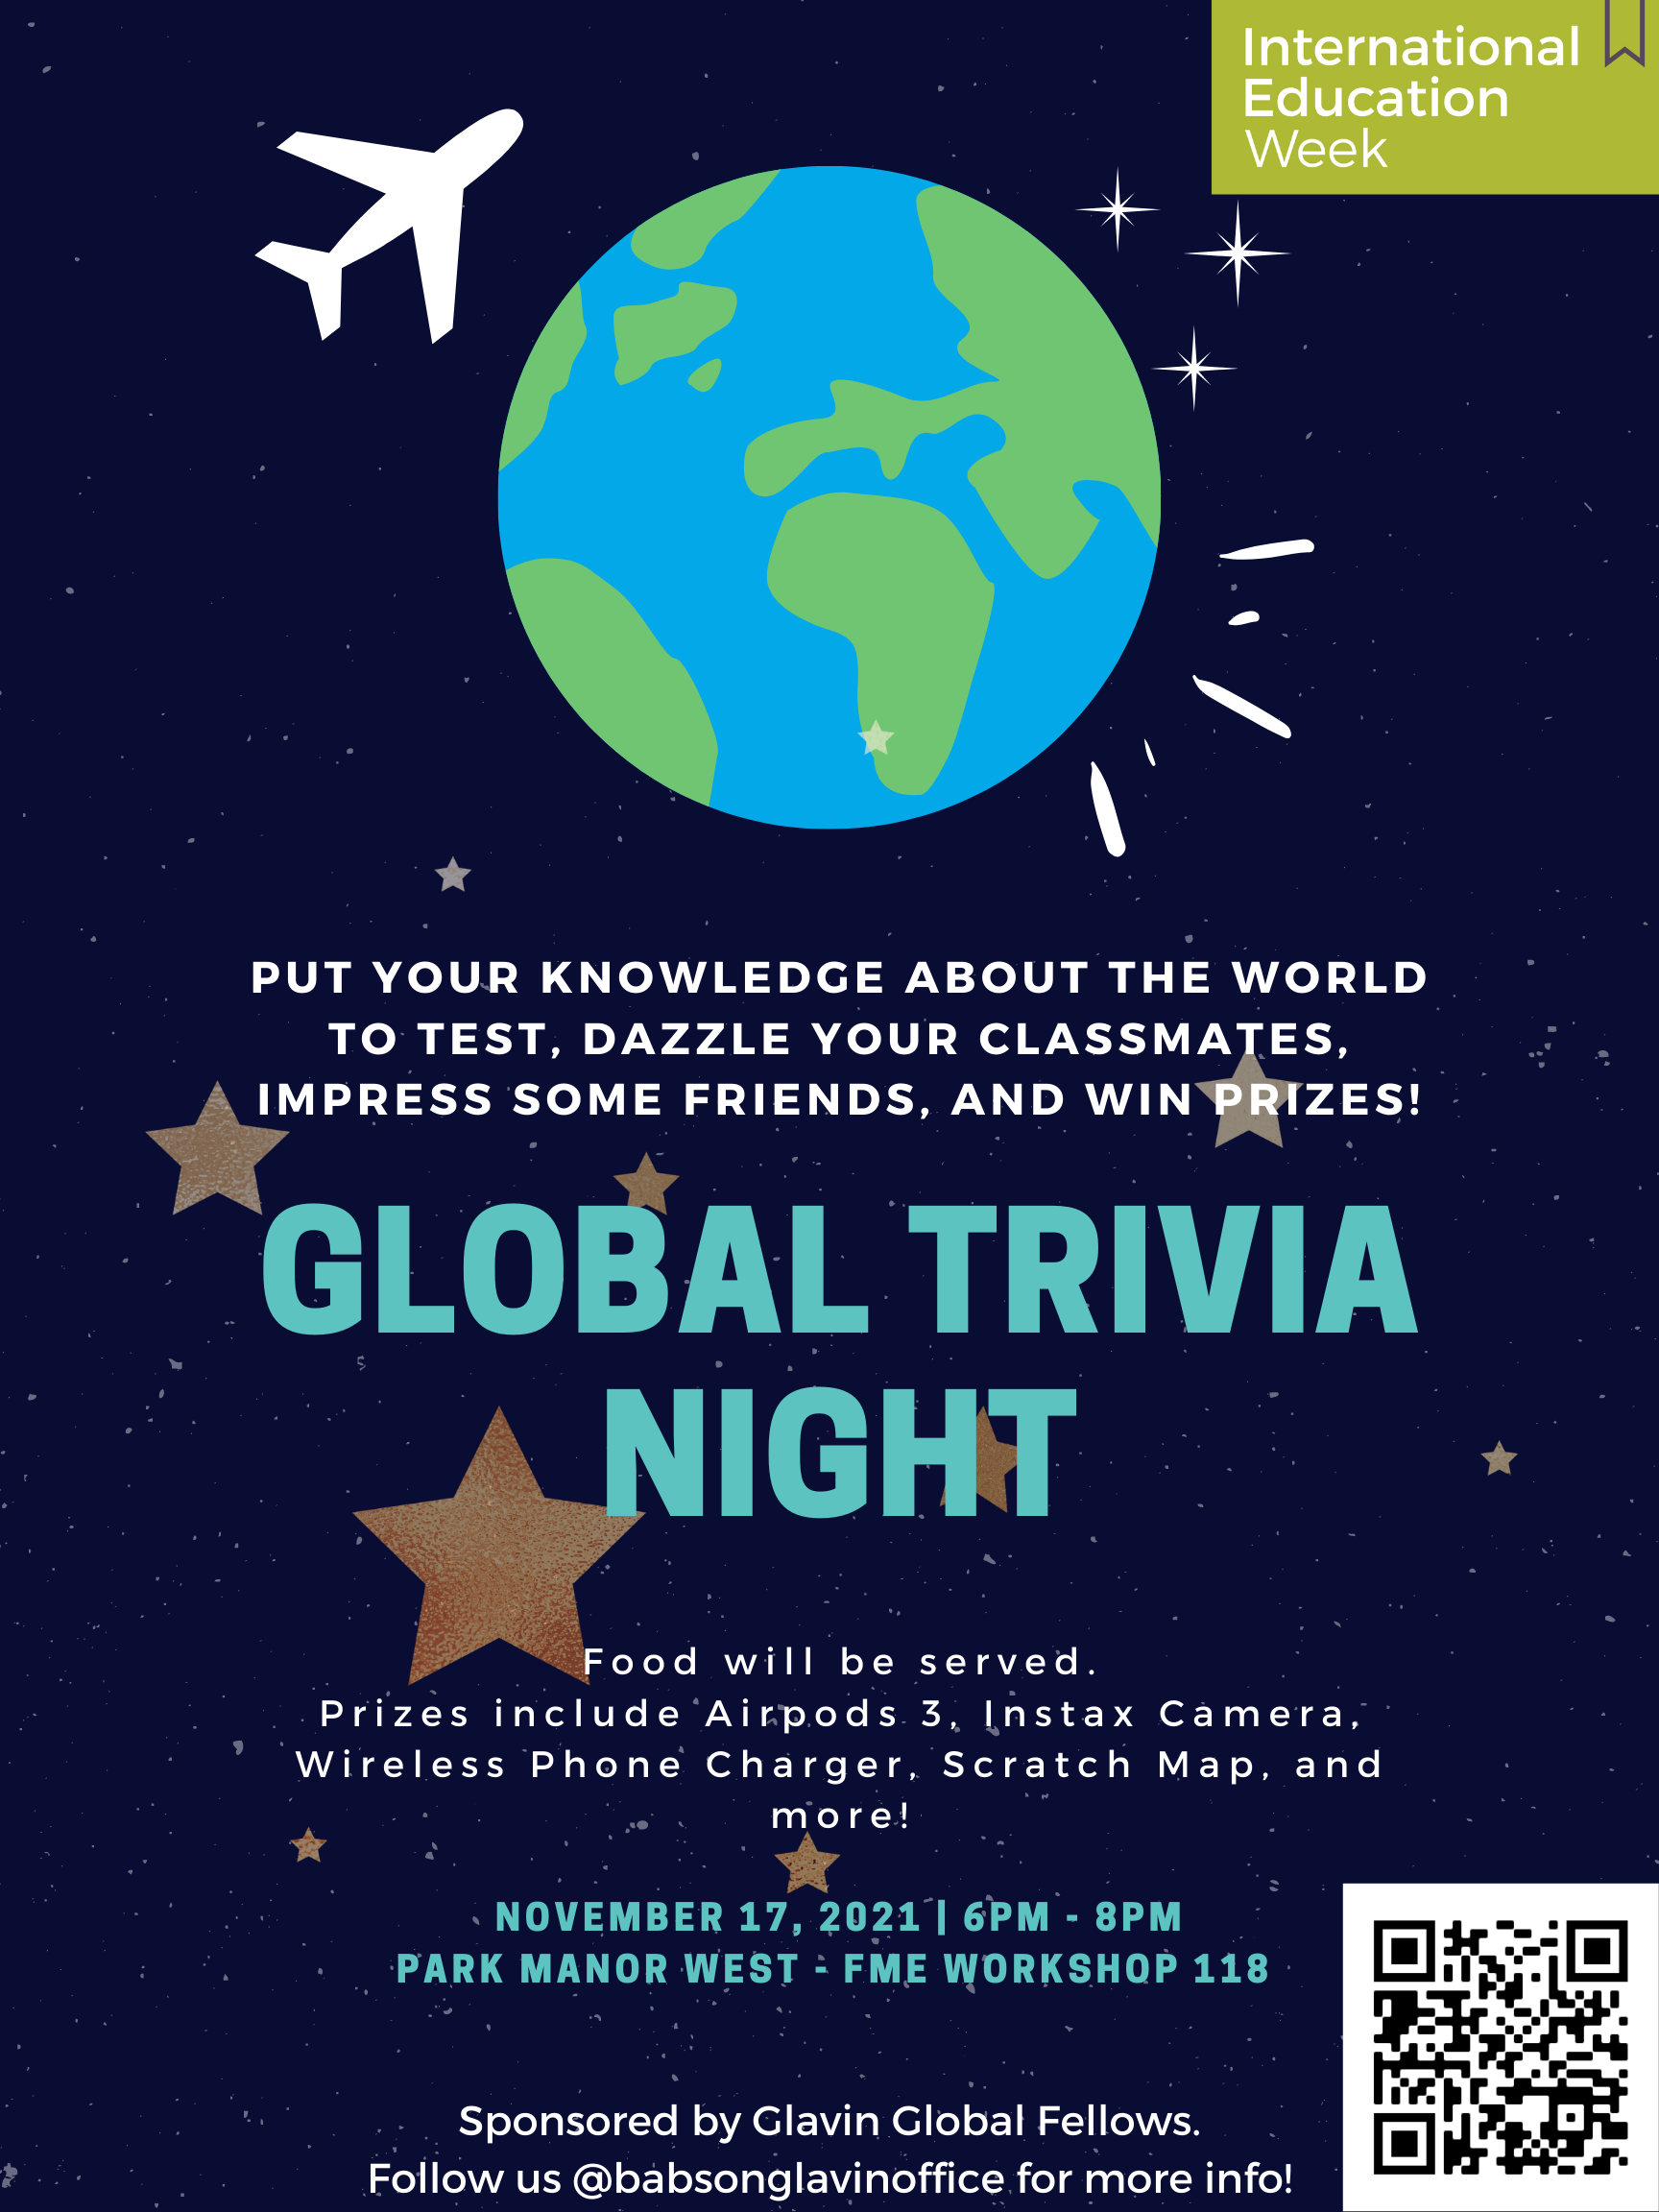 IEW 2021 - Global Trivia Night